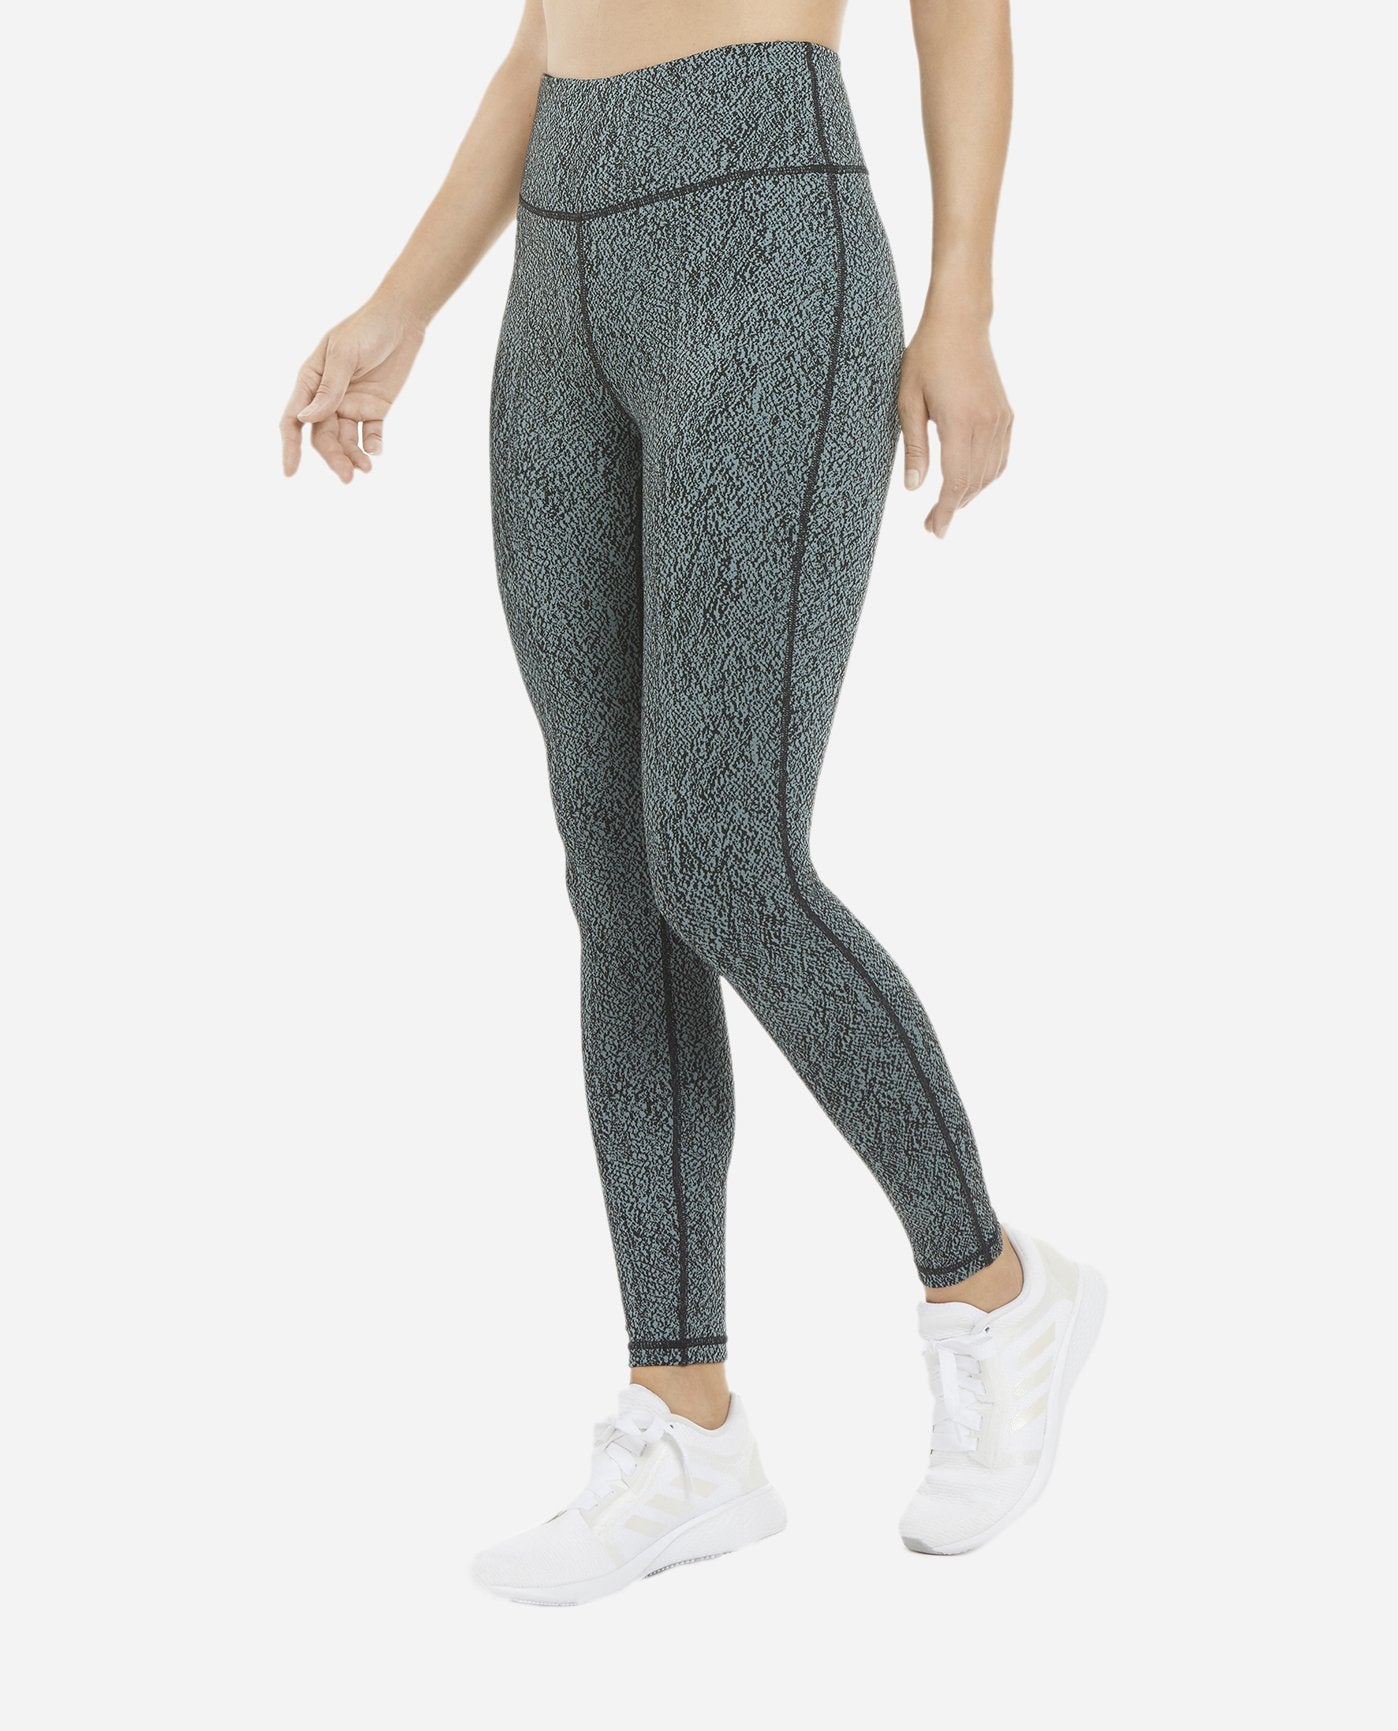 Lululemon High Rise Leggings 28” Gray Grey Thick Textured Knit